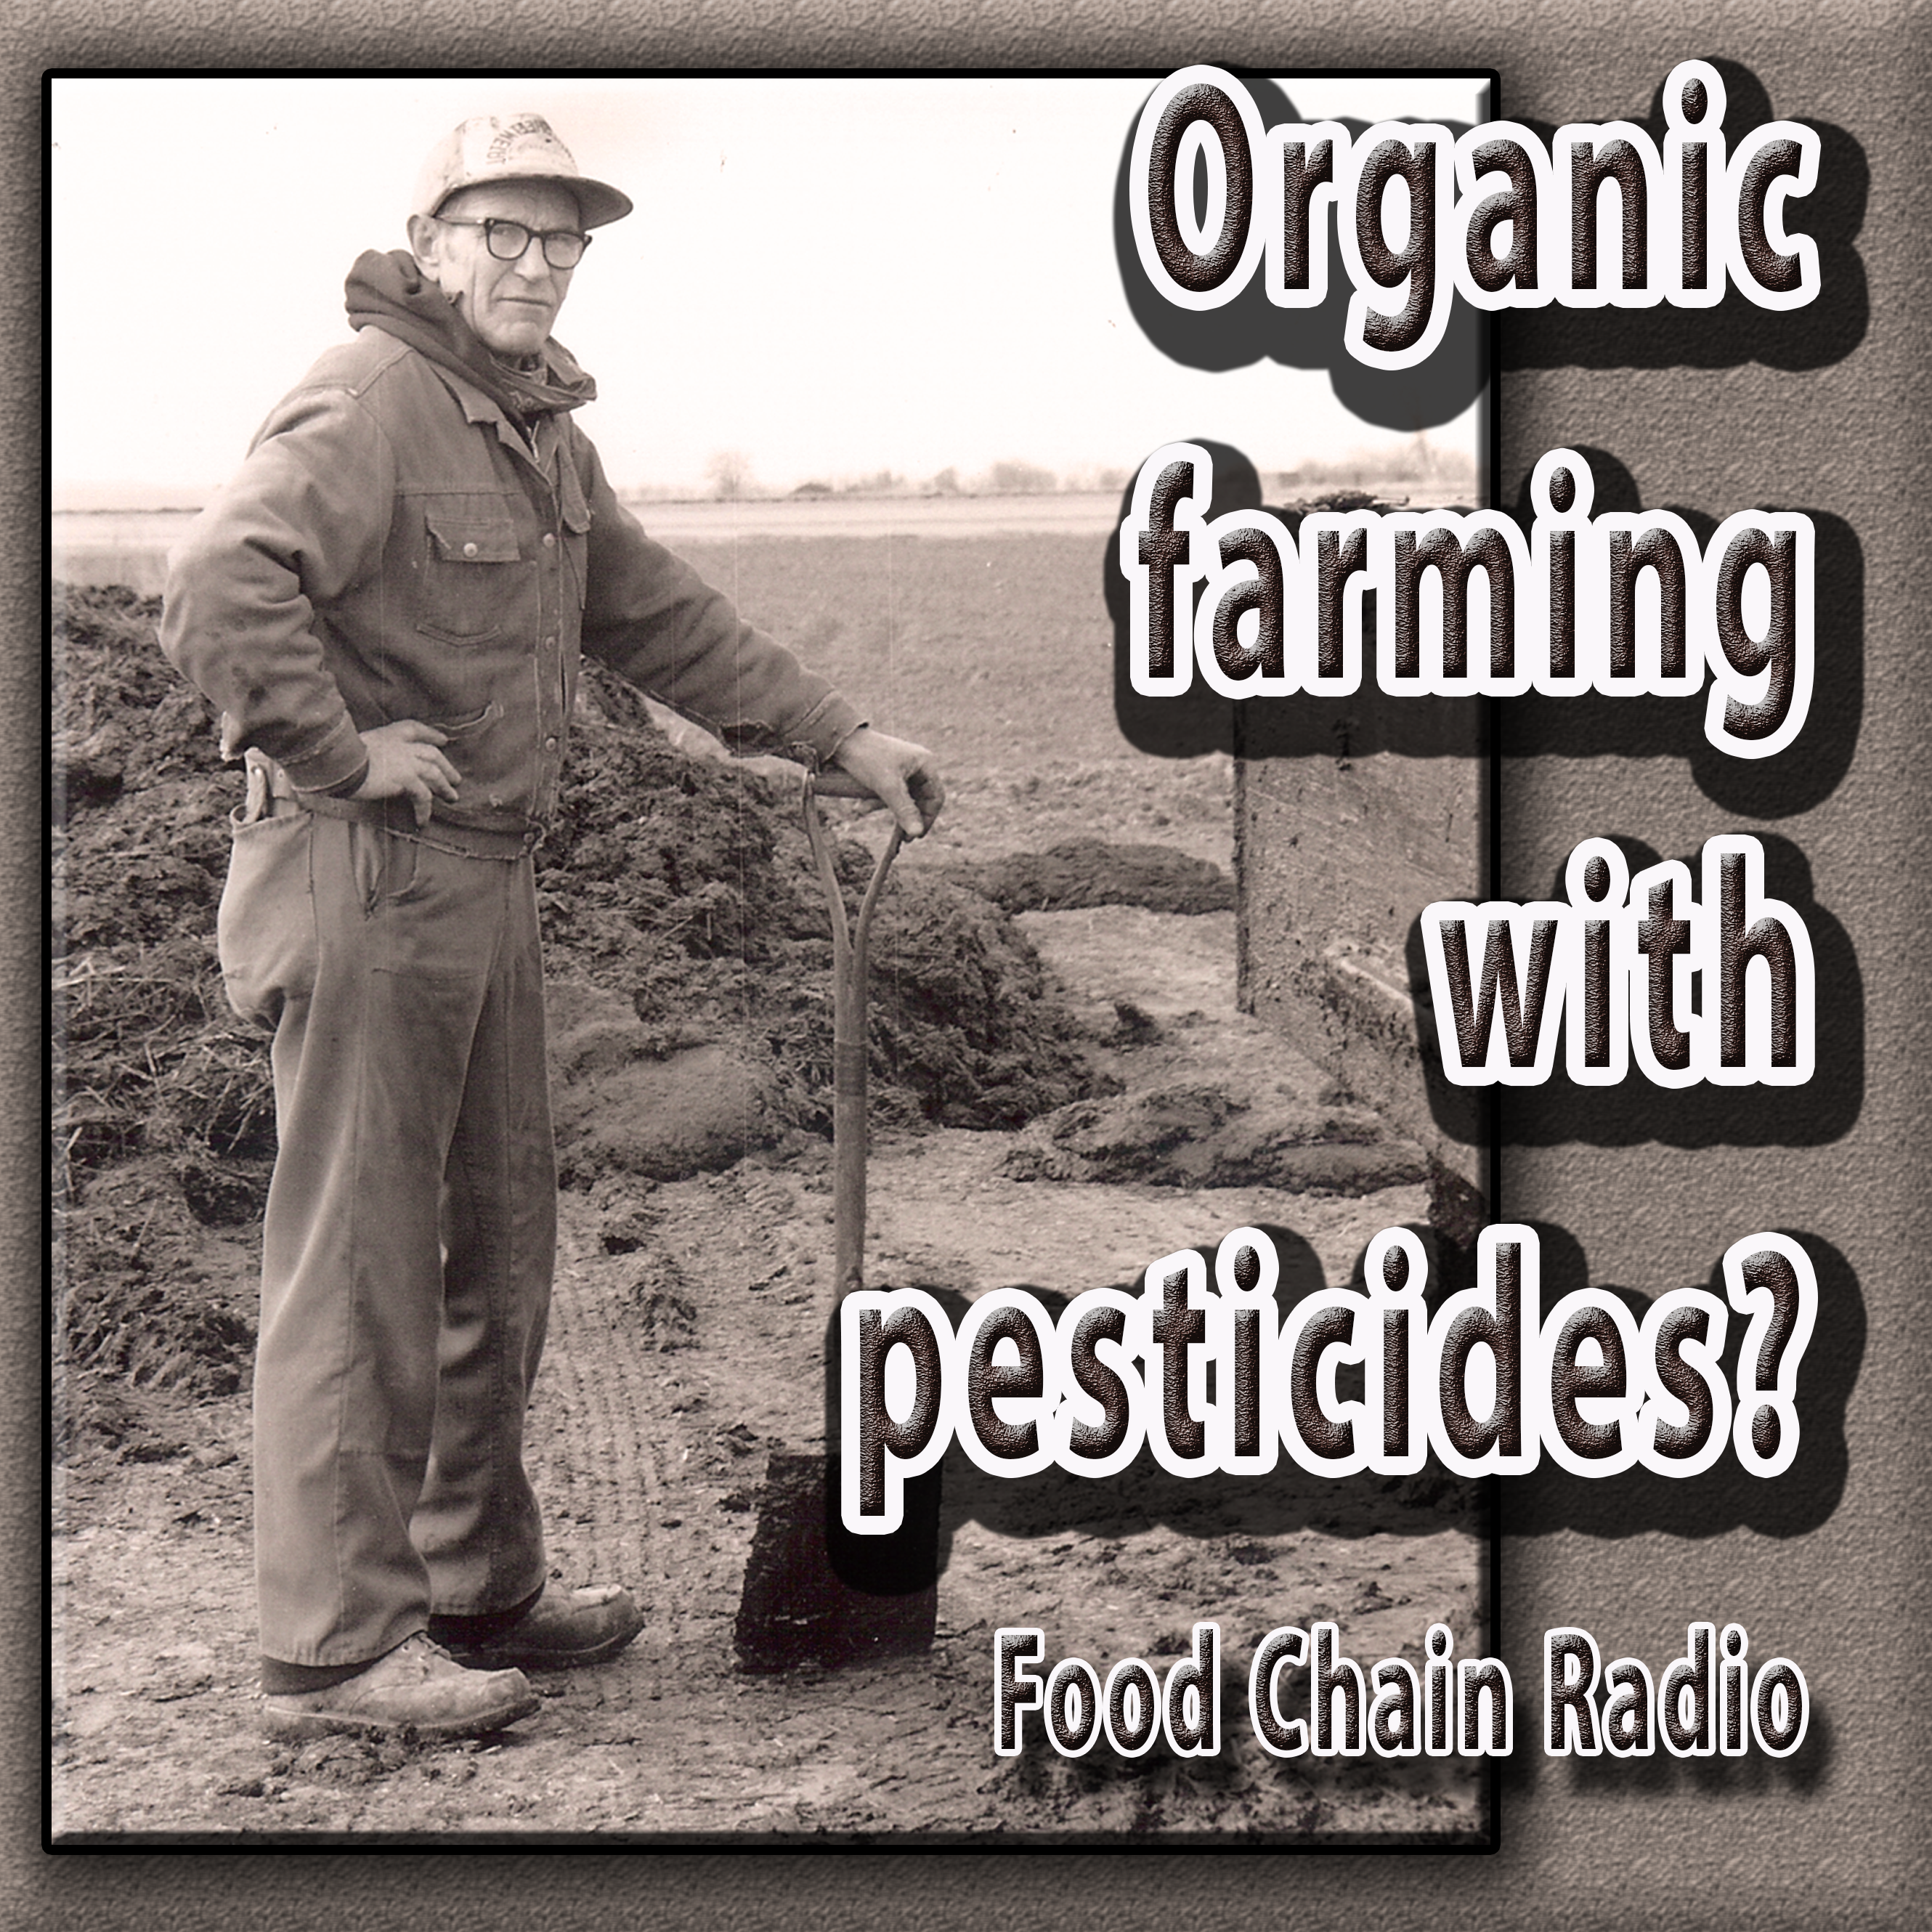 Michael Olson Food Chain Radio – Organic gardening with pesticides?